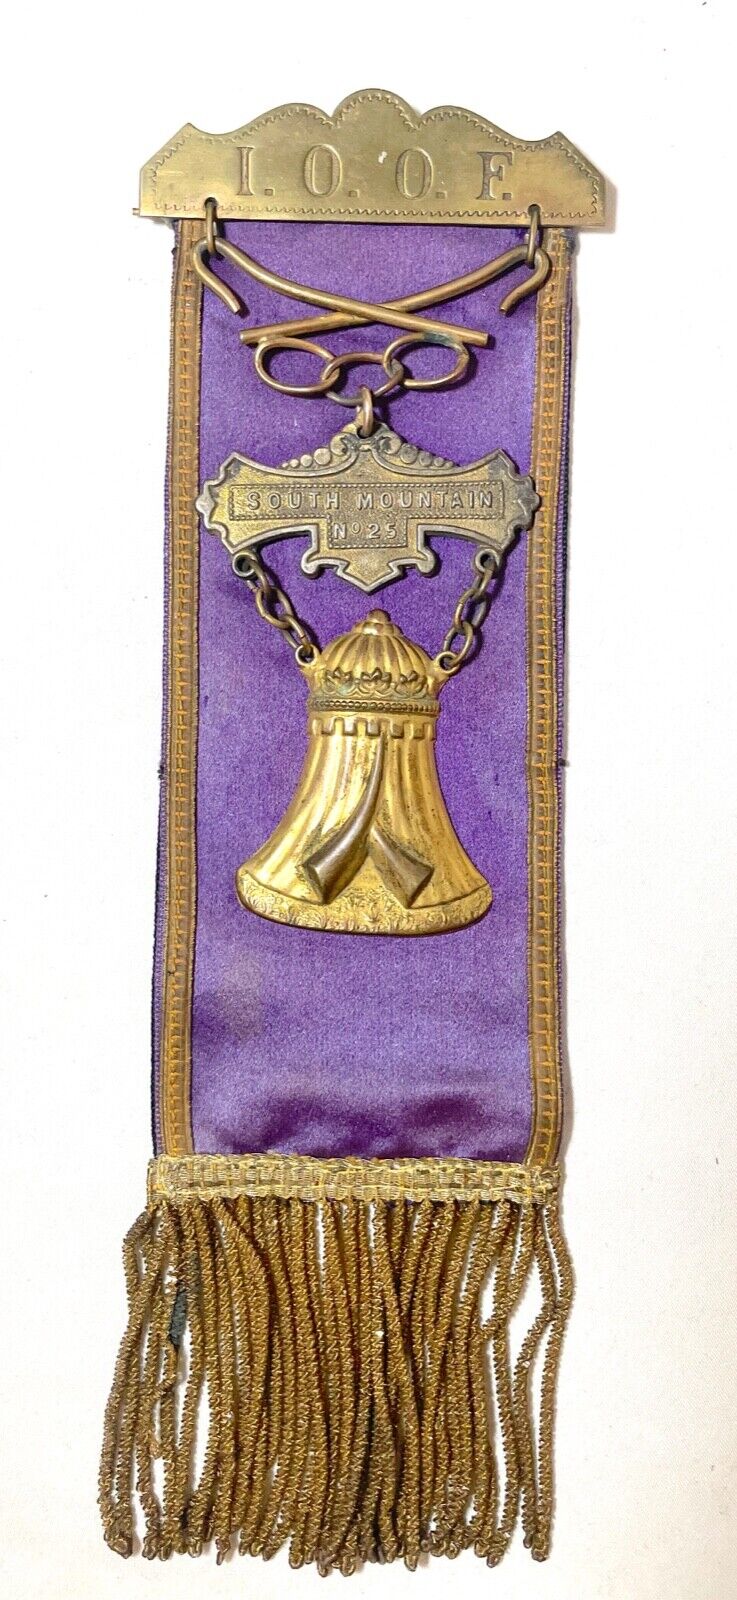 RARE antique IOOF Odd Fellows bronze Pin Badge 25 South mountain lodge ribbon